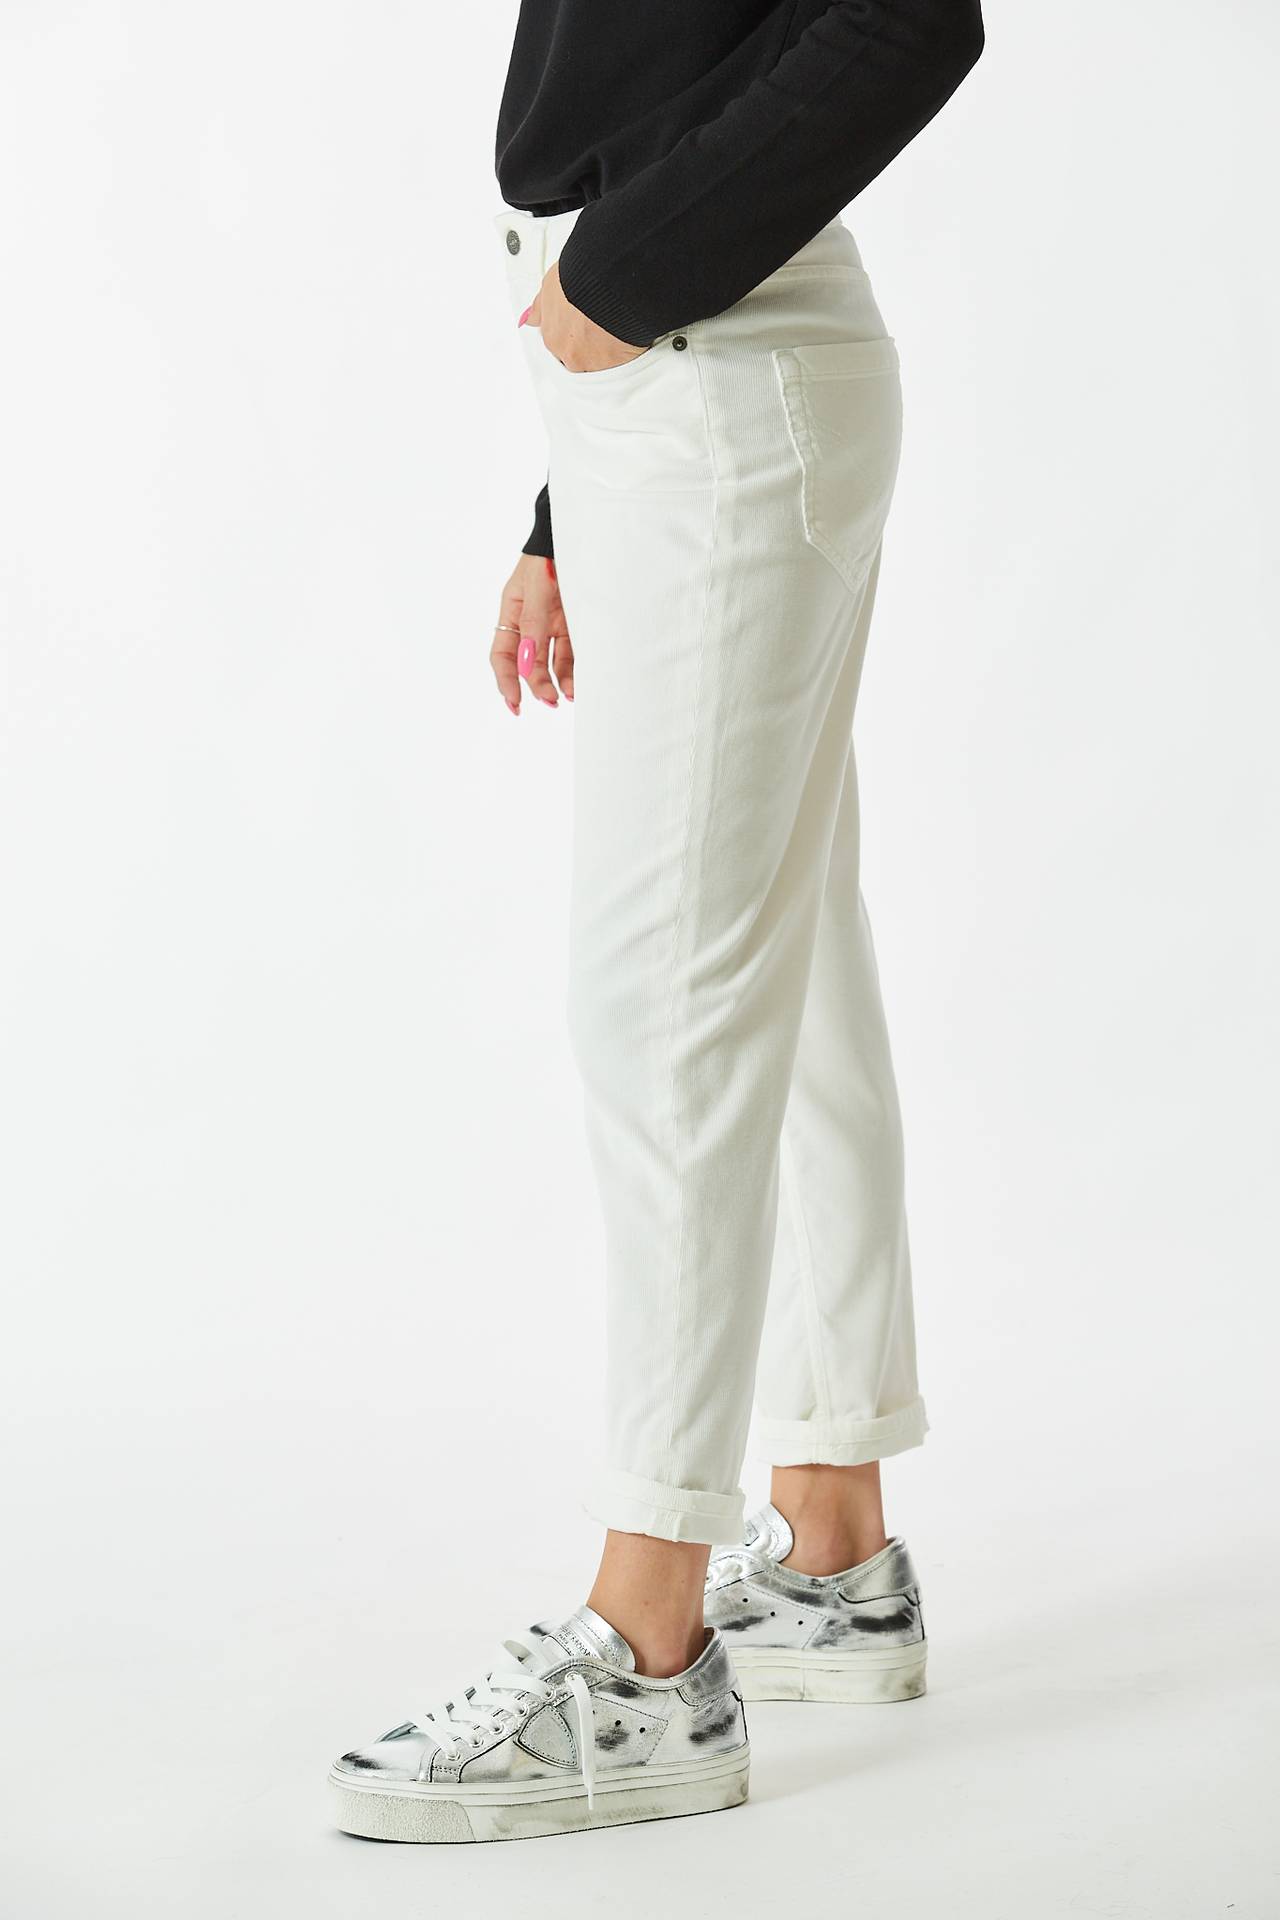 Pantalone KOONS in velluto bianco